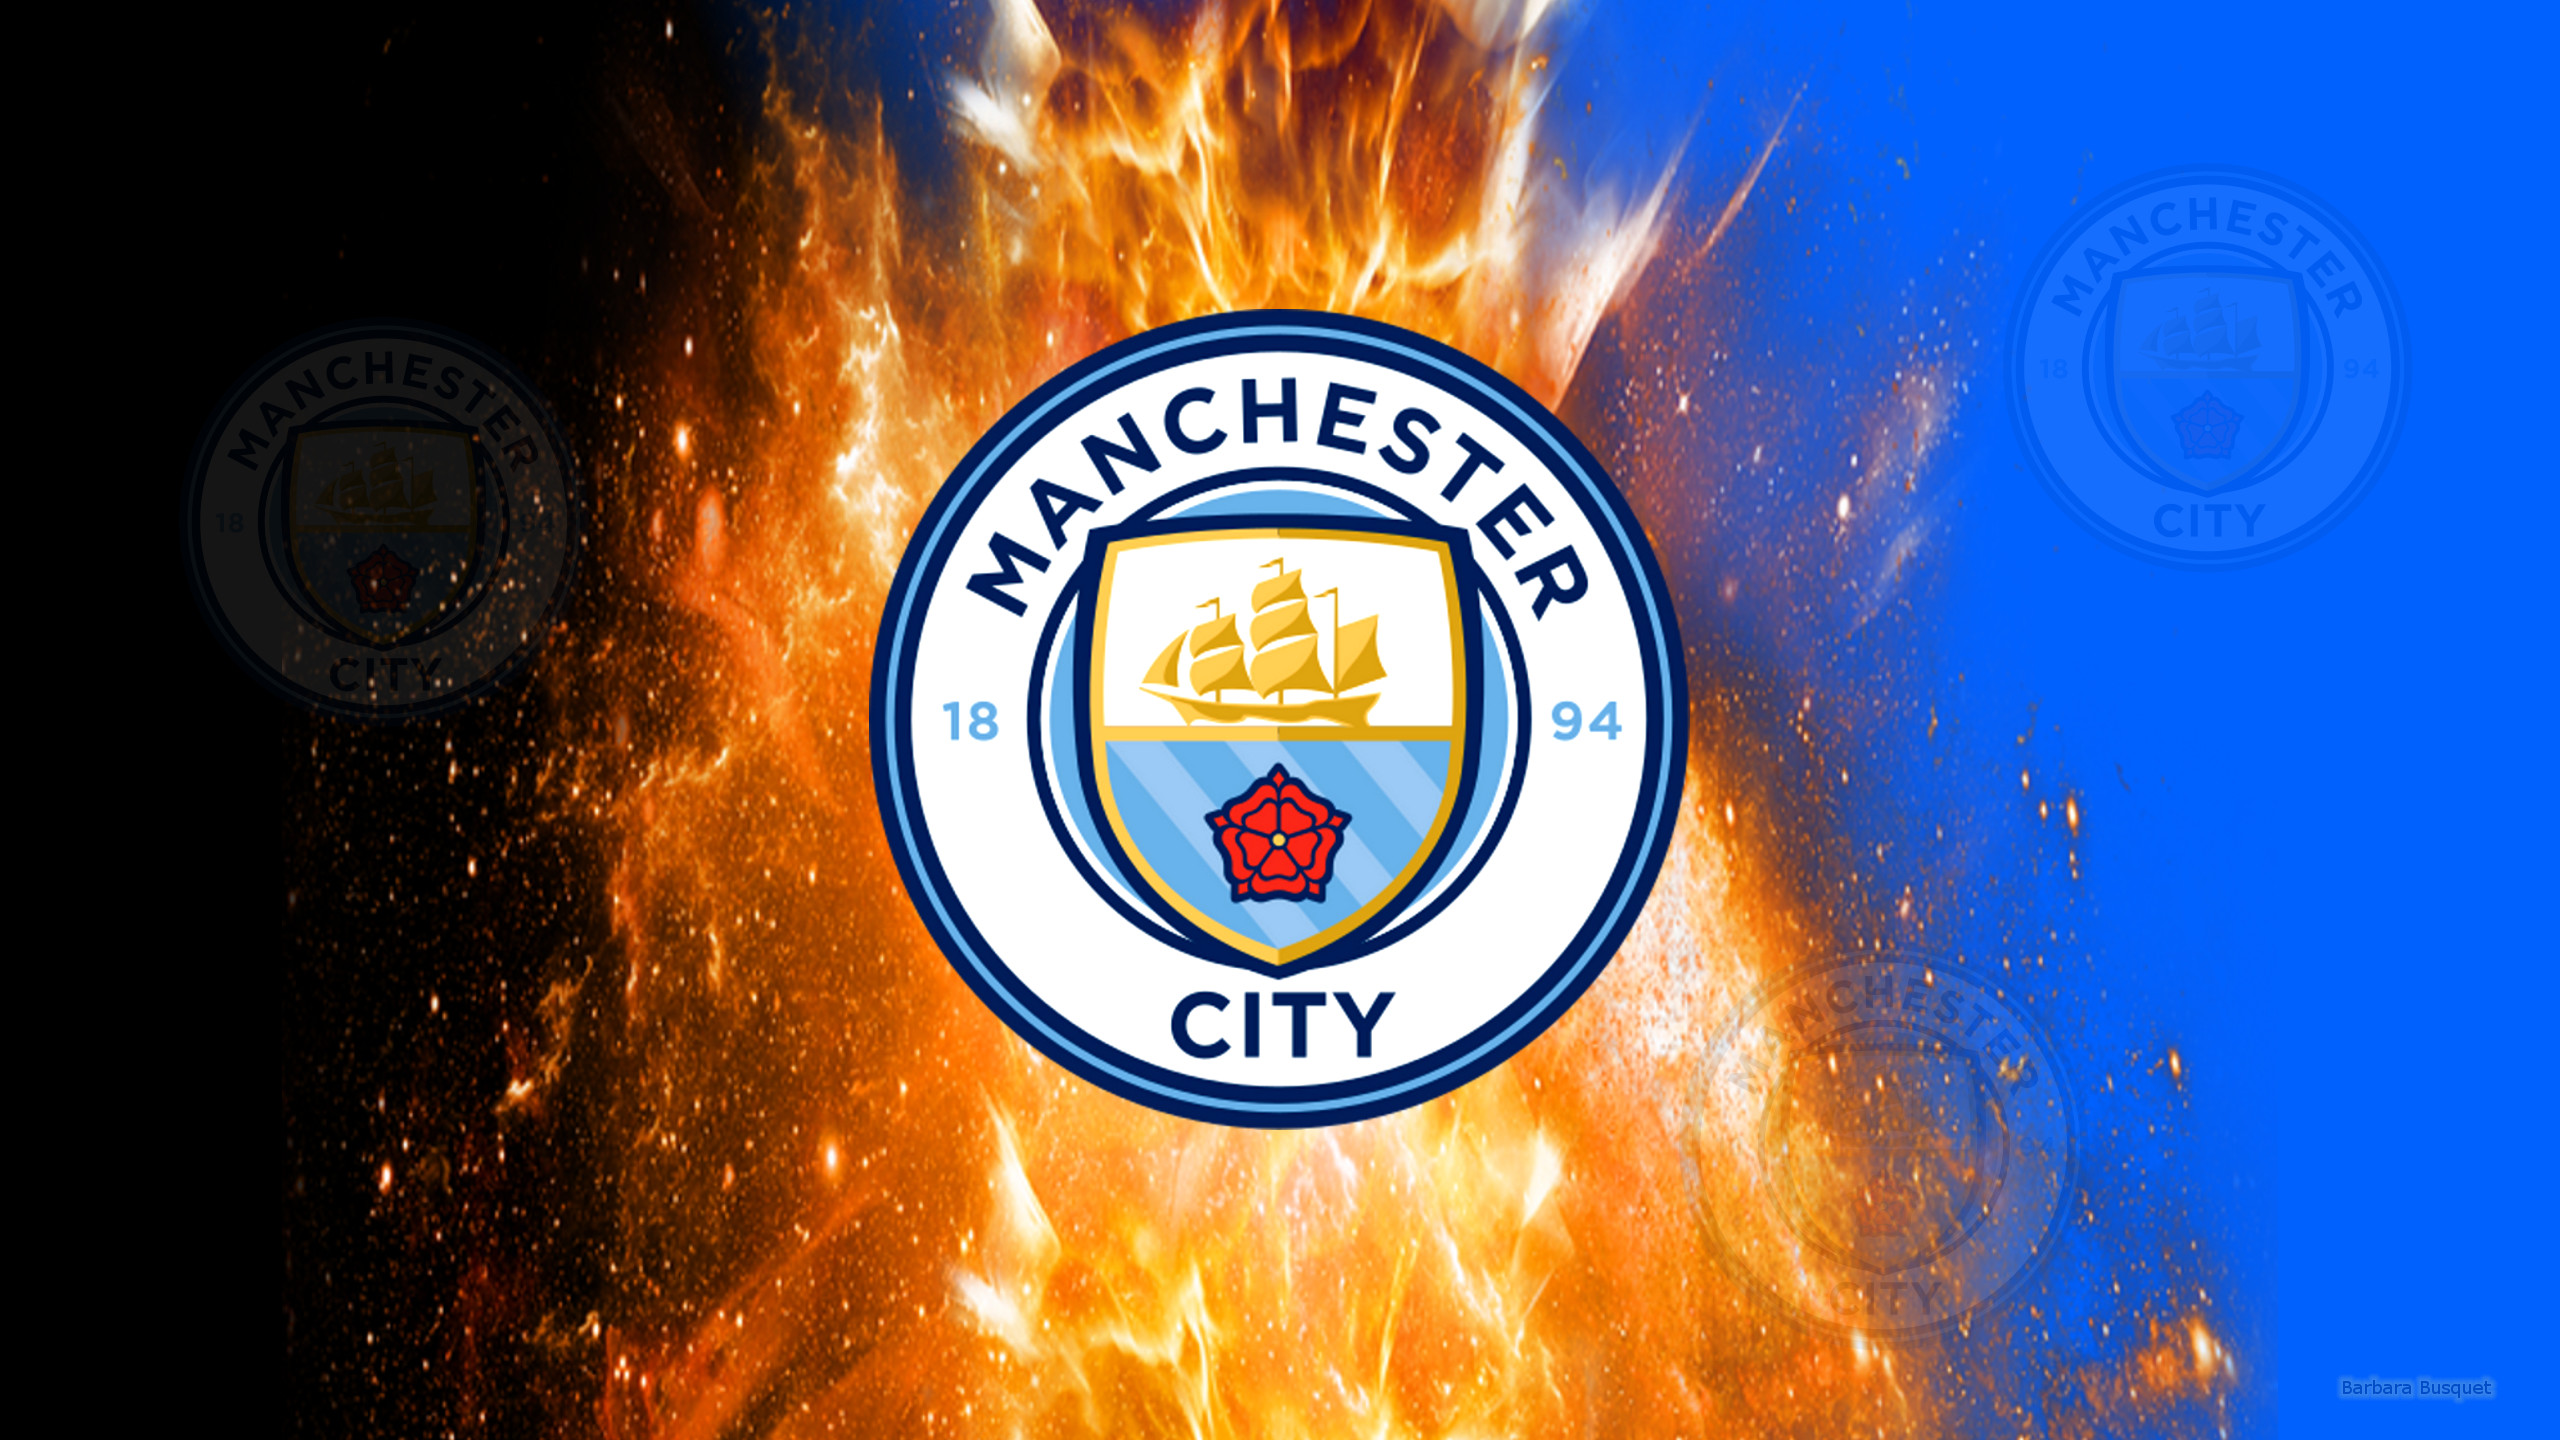 Mancity Logo Classic and Retro Manchester City Football Shirts